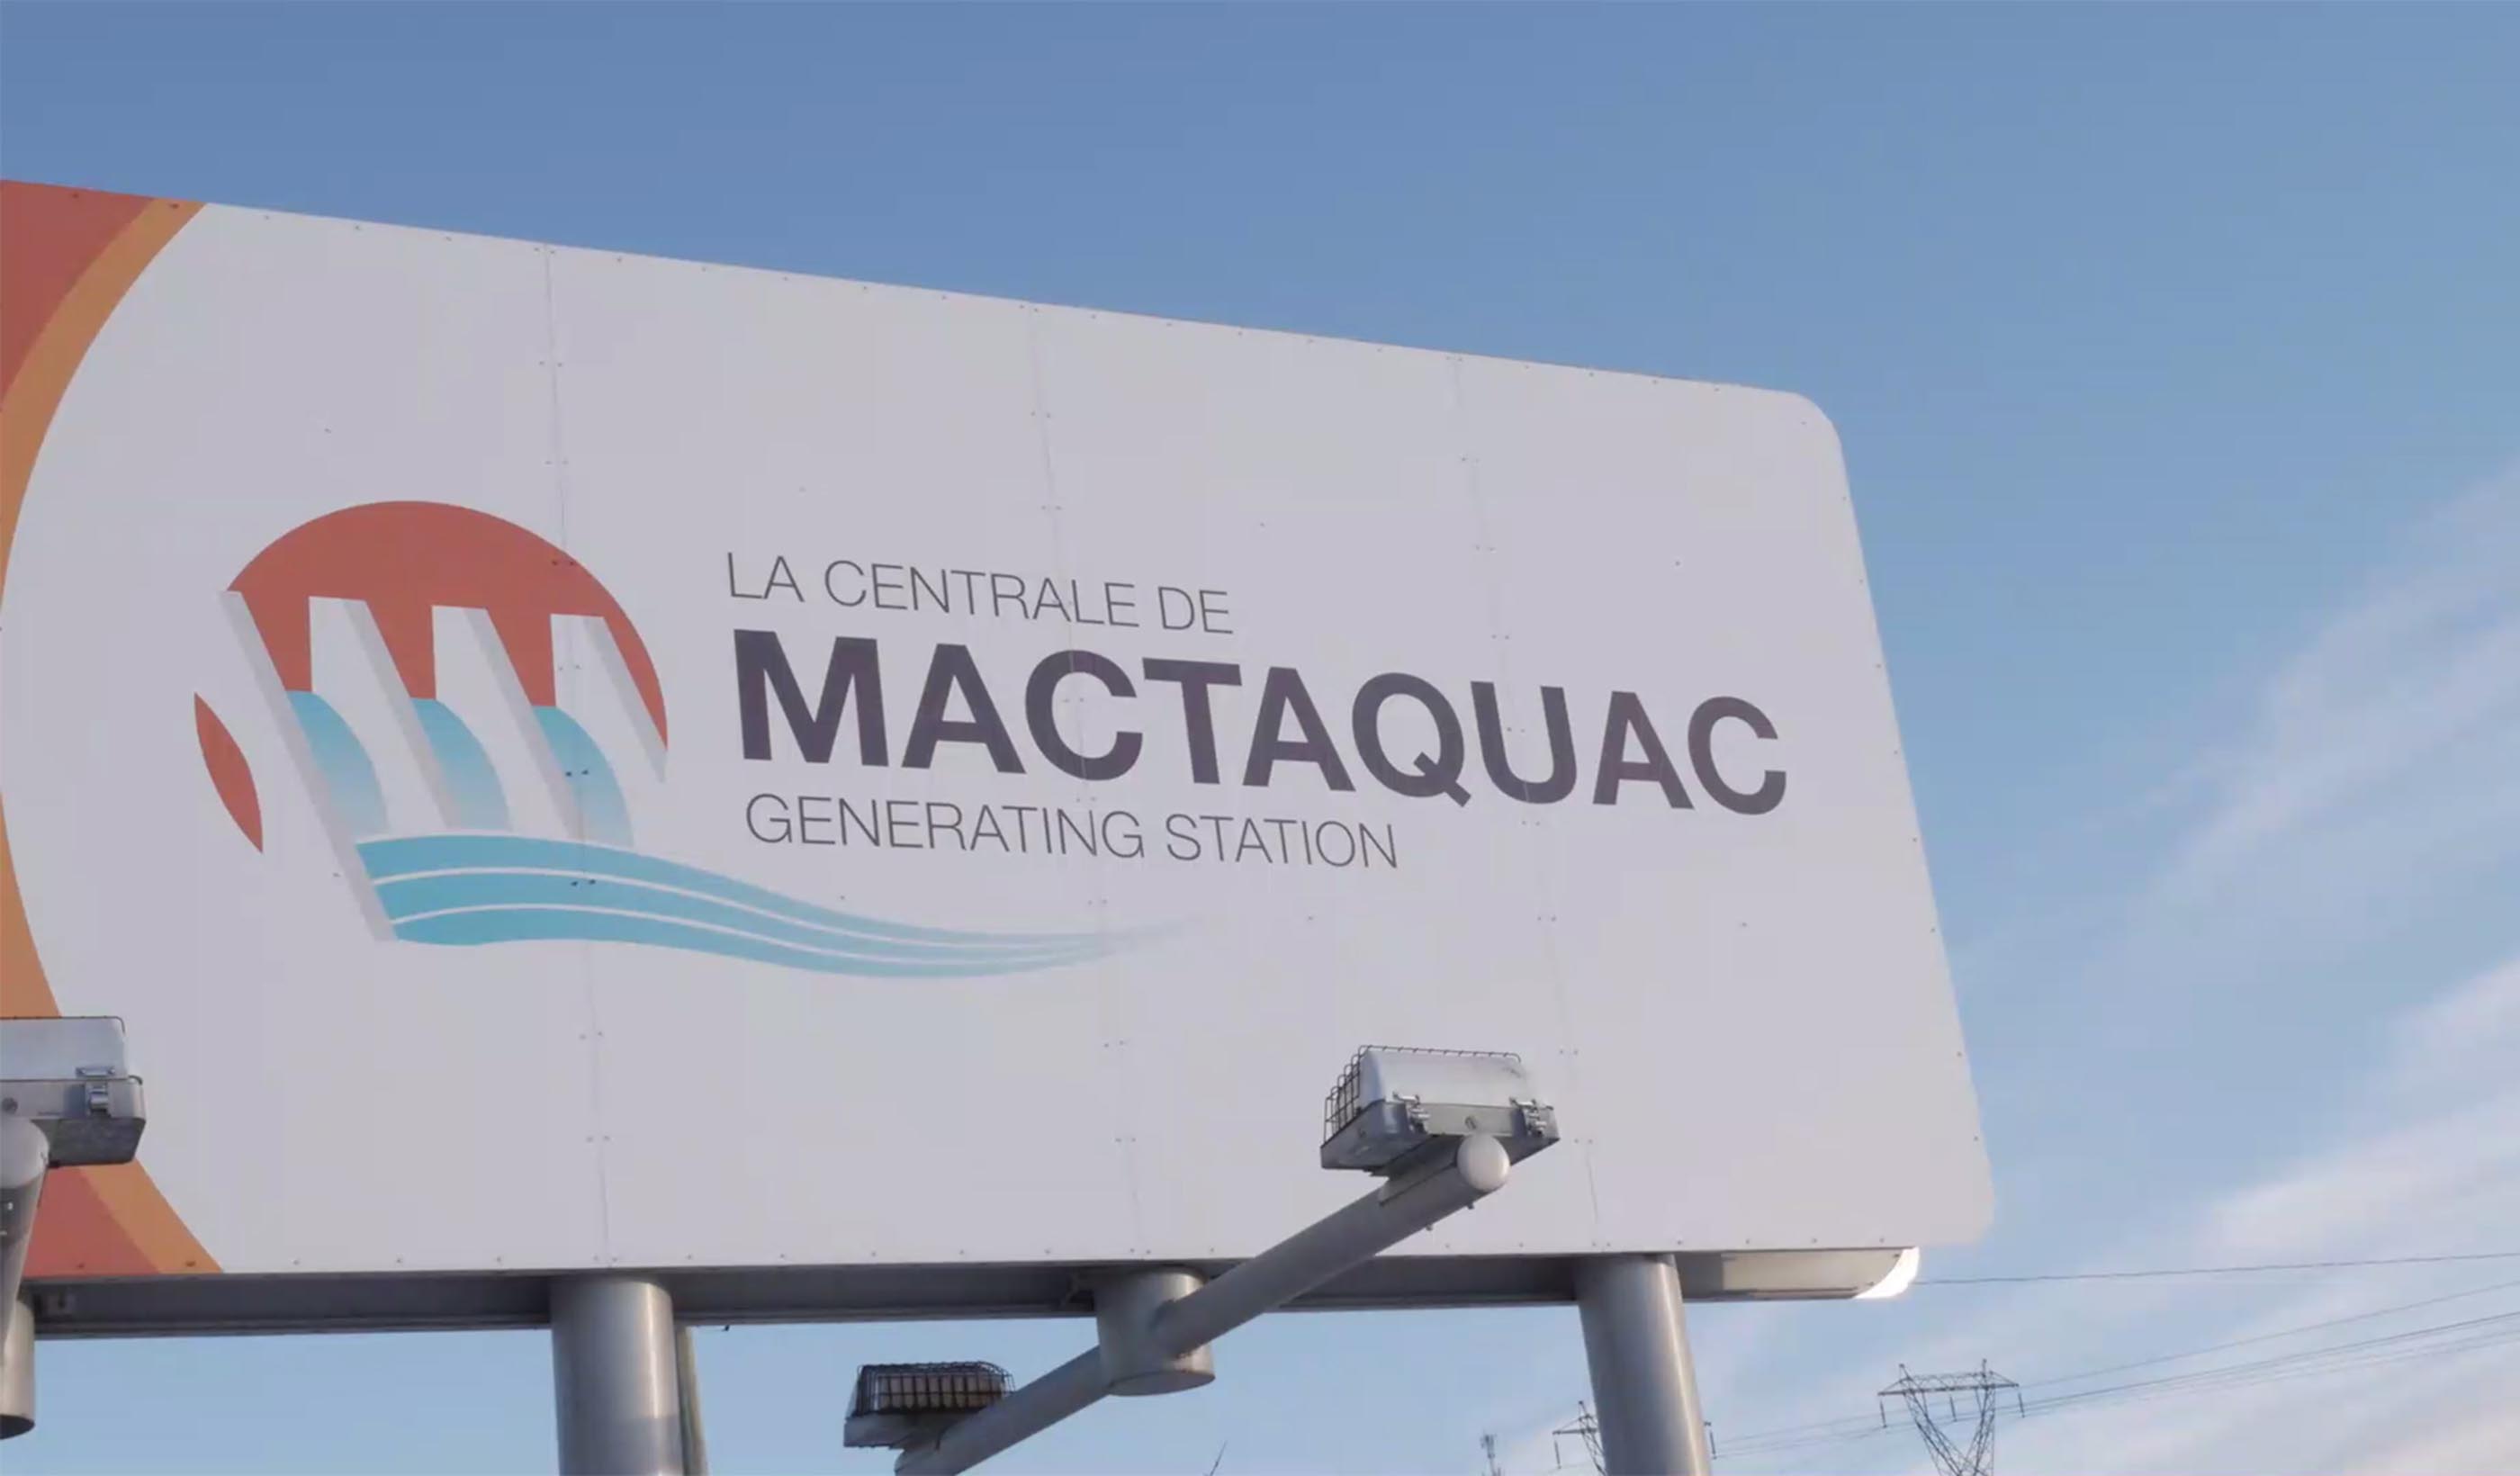 The Mactaquac Life Achievement Project